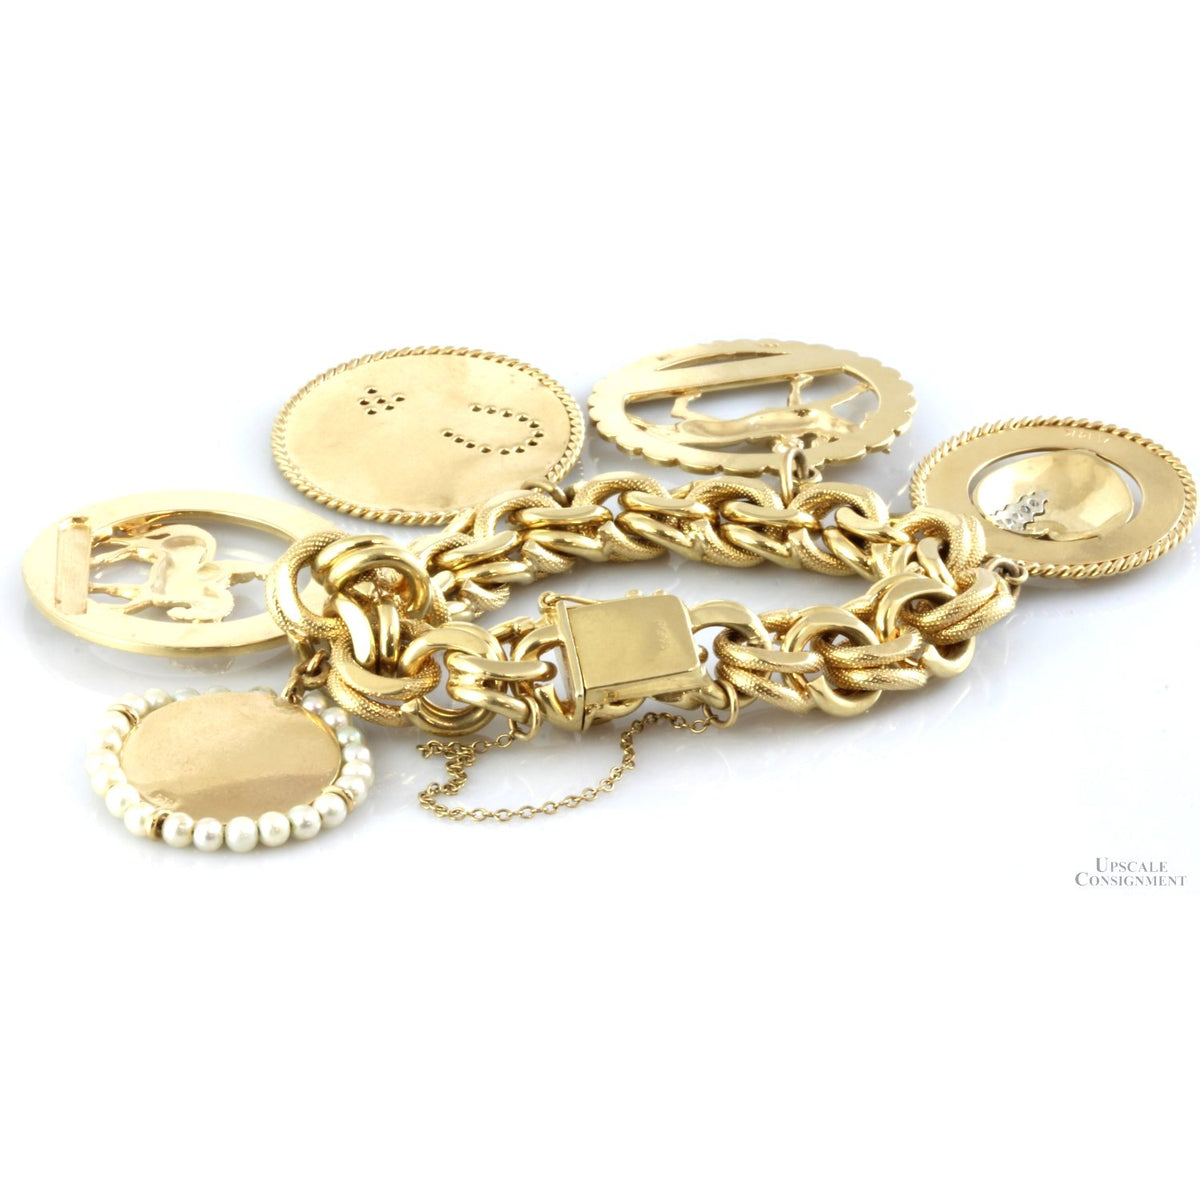 14K Gold Double Curb Link Charm Bracelet - .31ctw Diamonds .30ctw Rubies Pearls